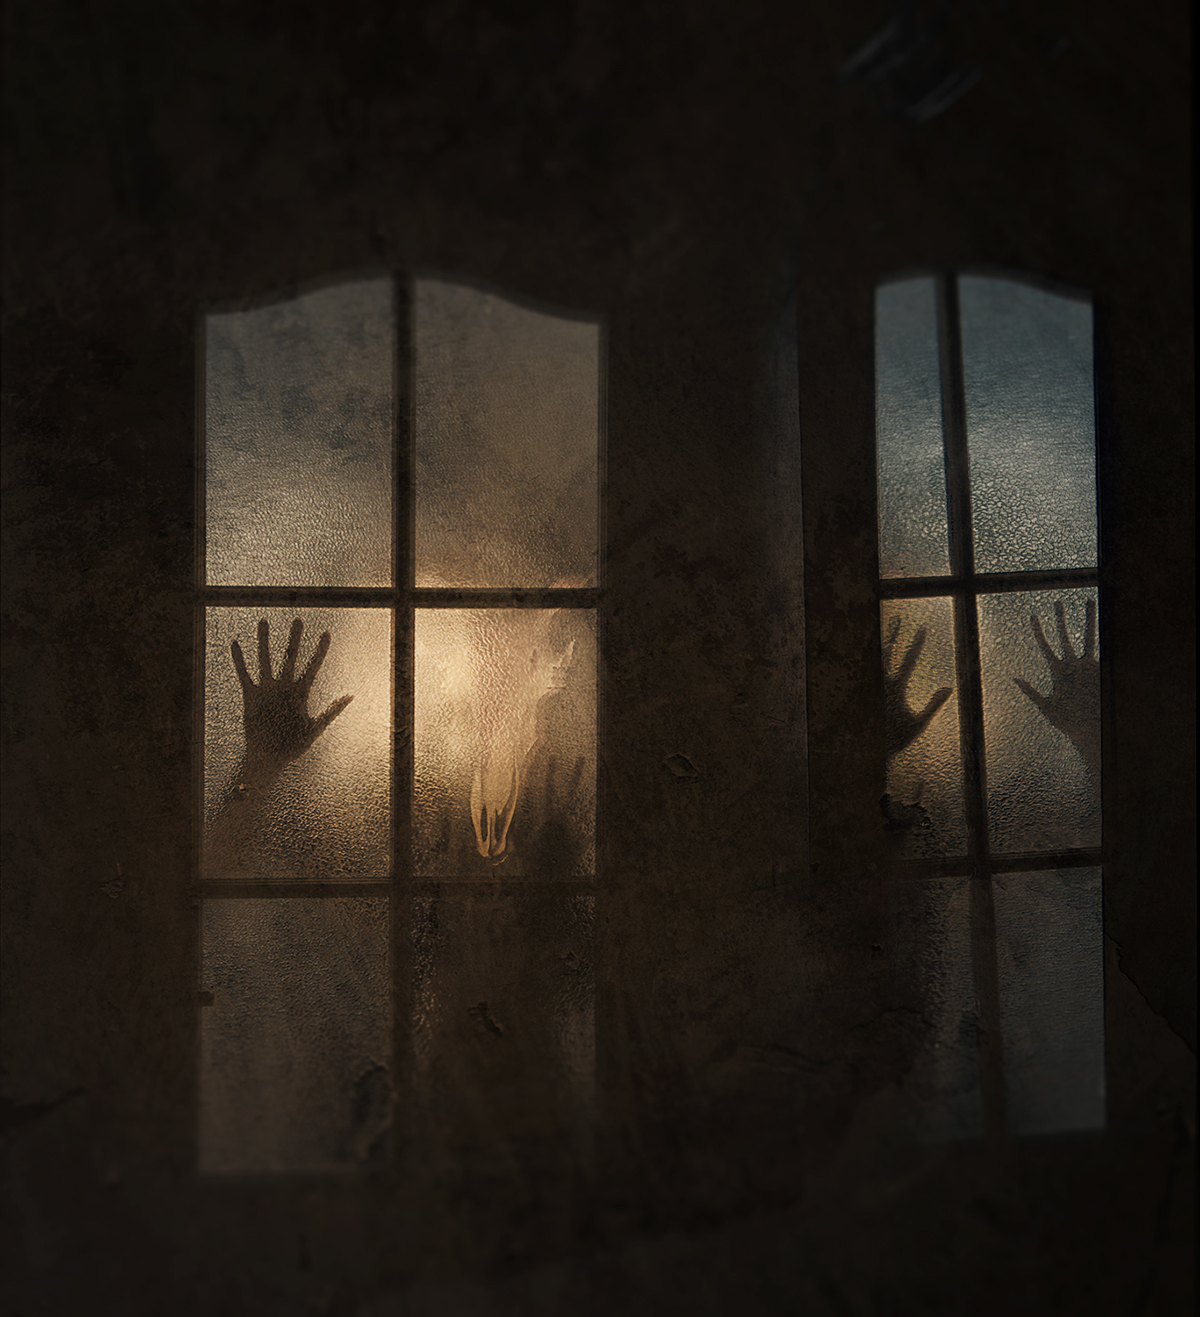 dark vintage long exposure hands artistic conceptual eerie ghostly haunting darkness texture Window light mirror